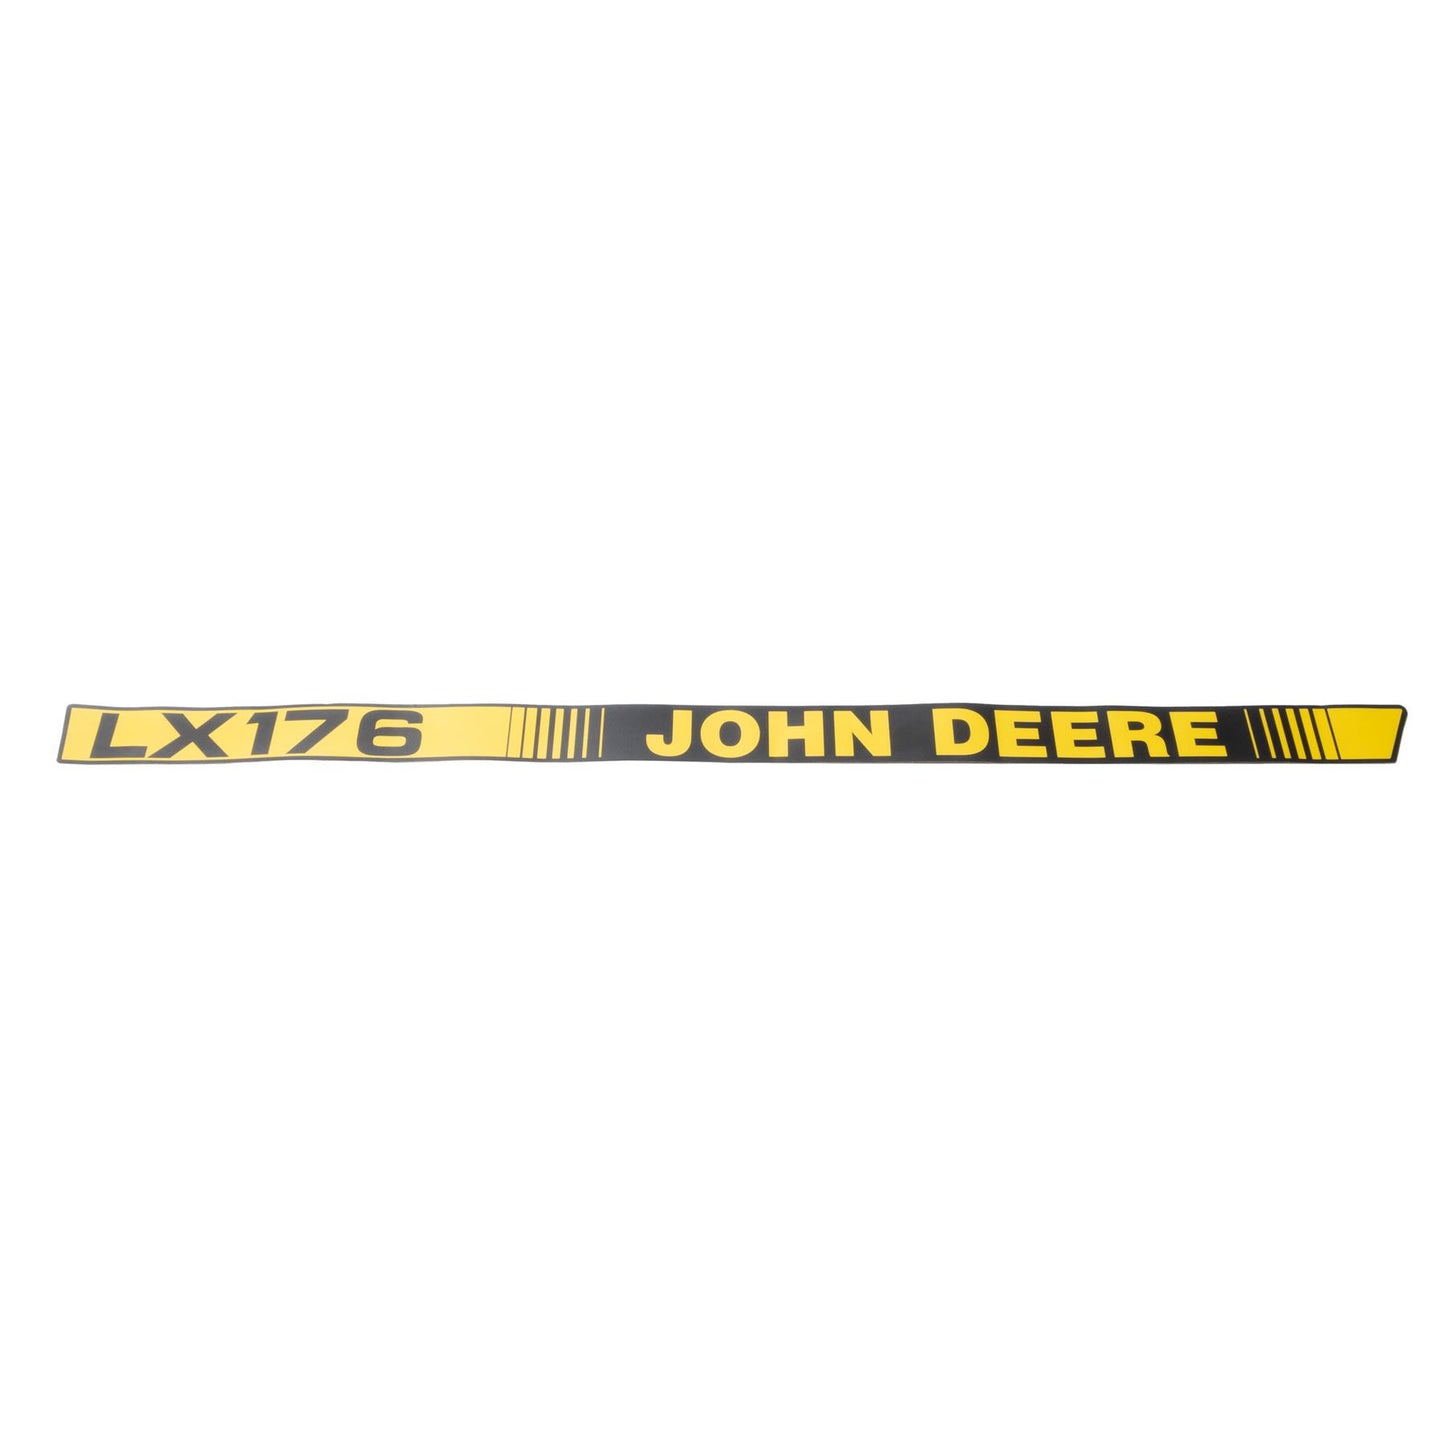 John Deere Decal - LX176 - Both Sides - M116036 M116037